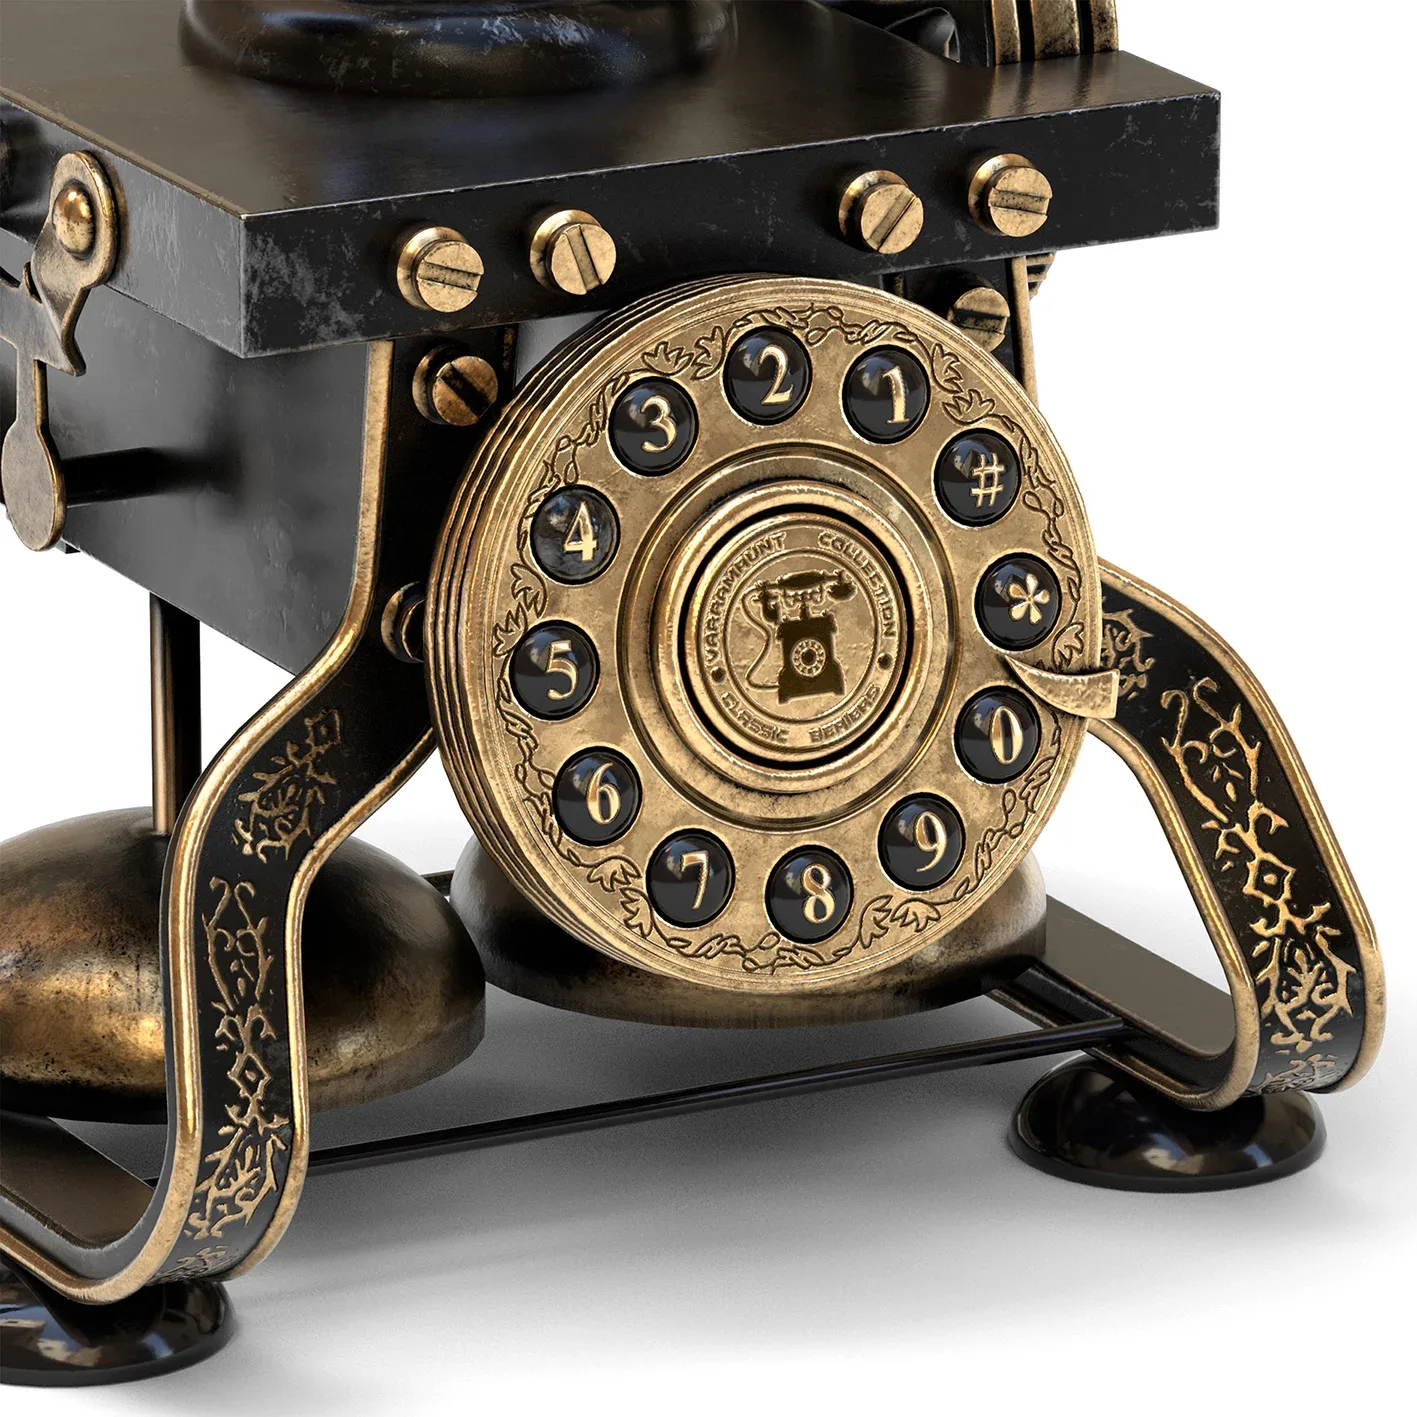 Antique Telephone Classic Rotating Dial Mechanical Ringtone Home Phone